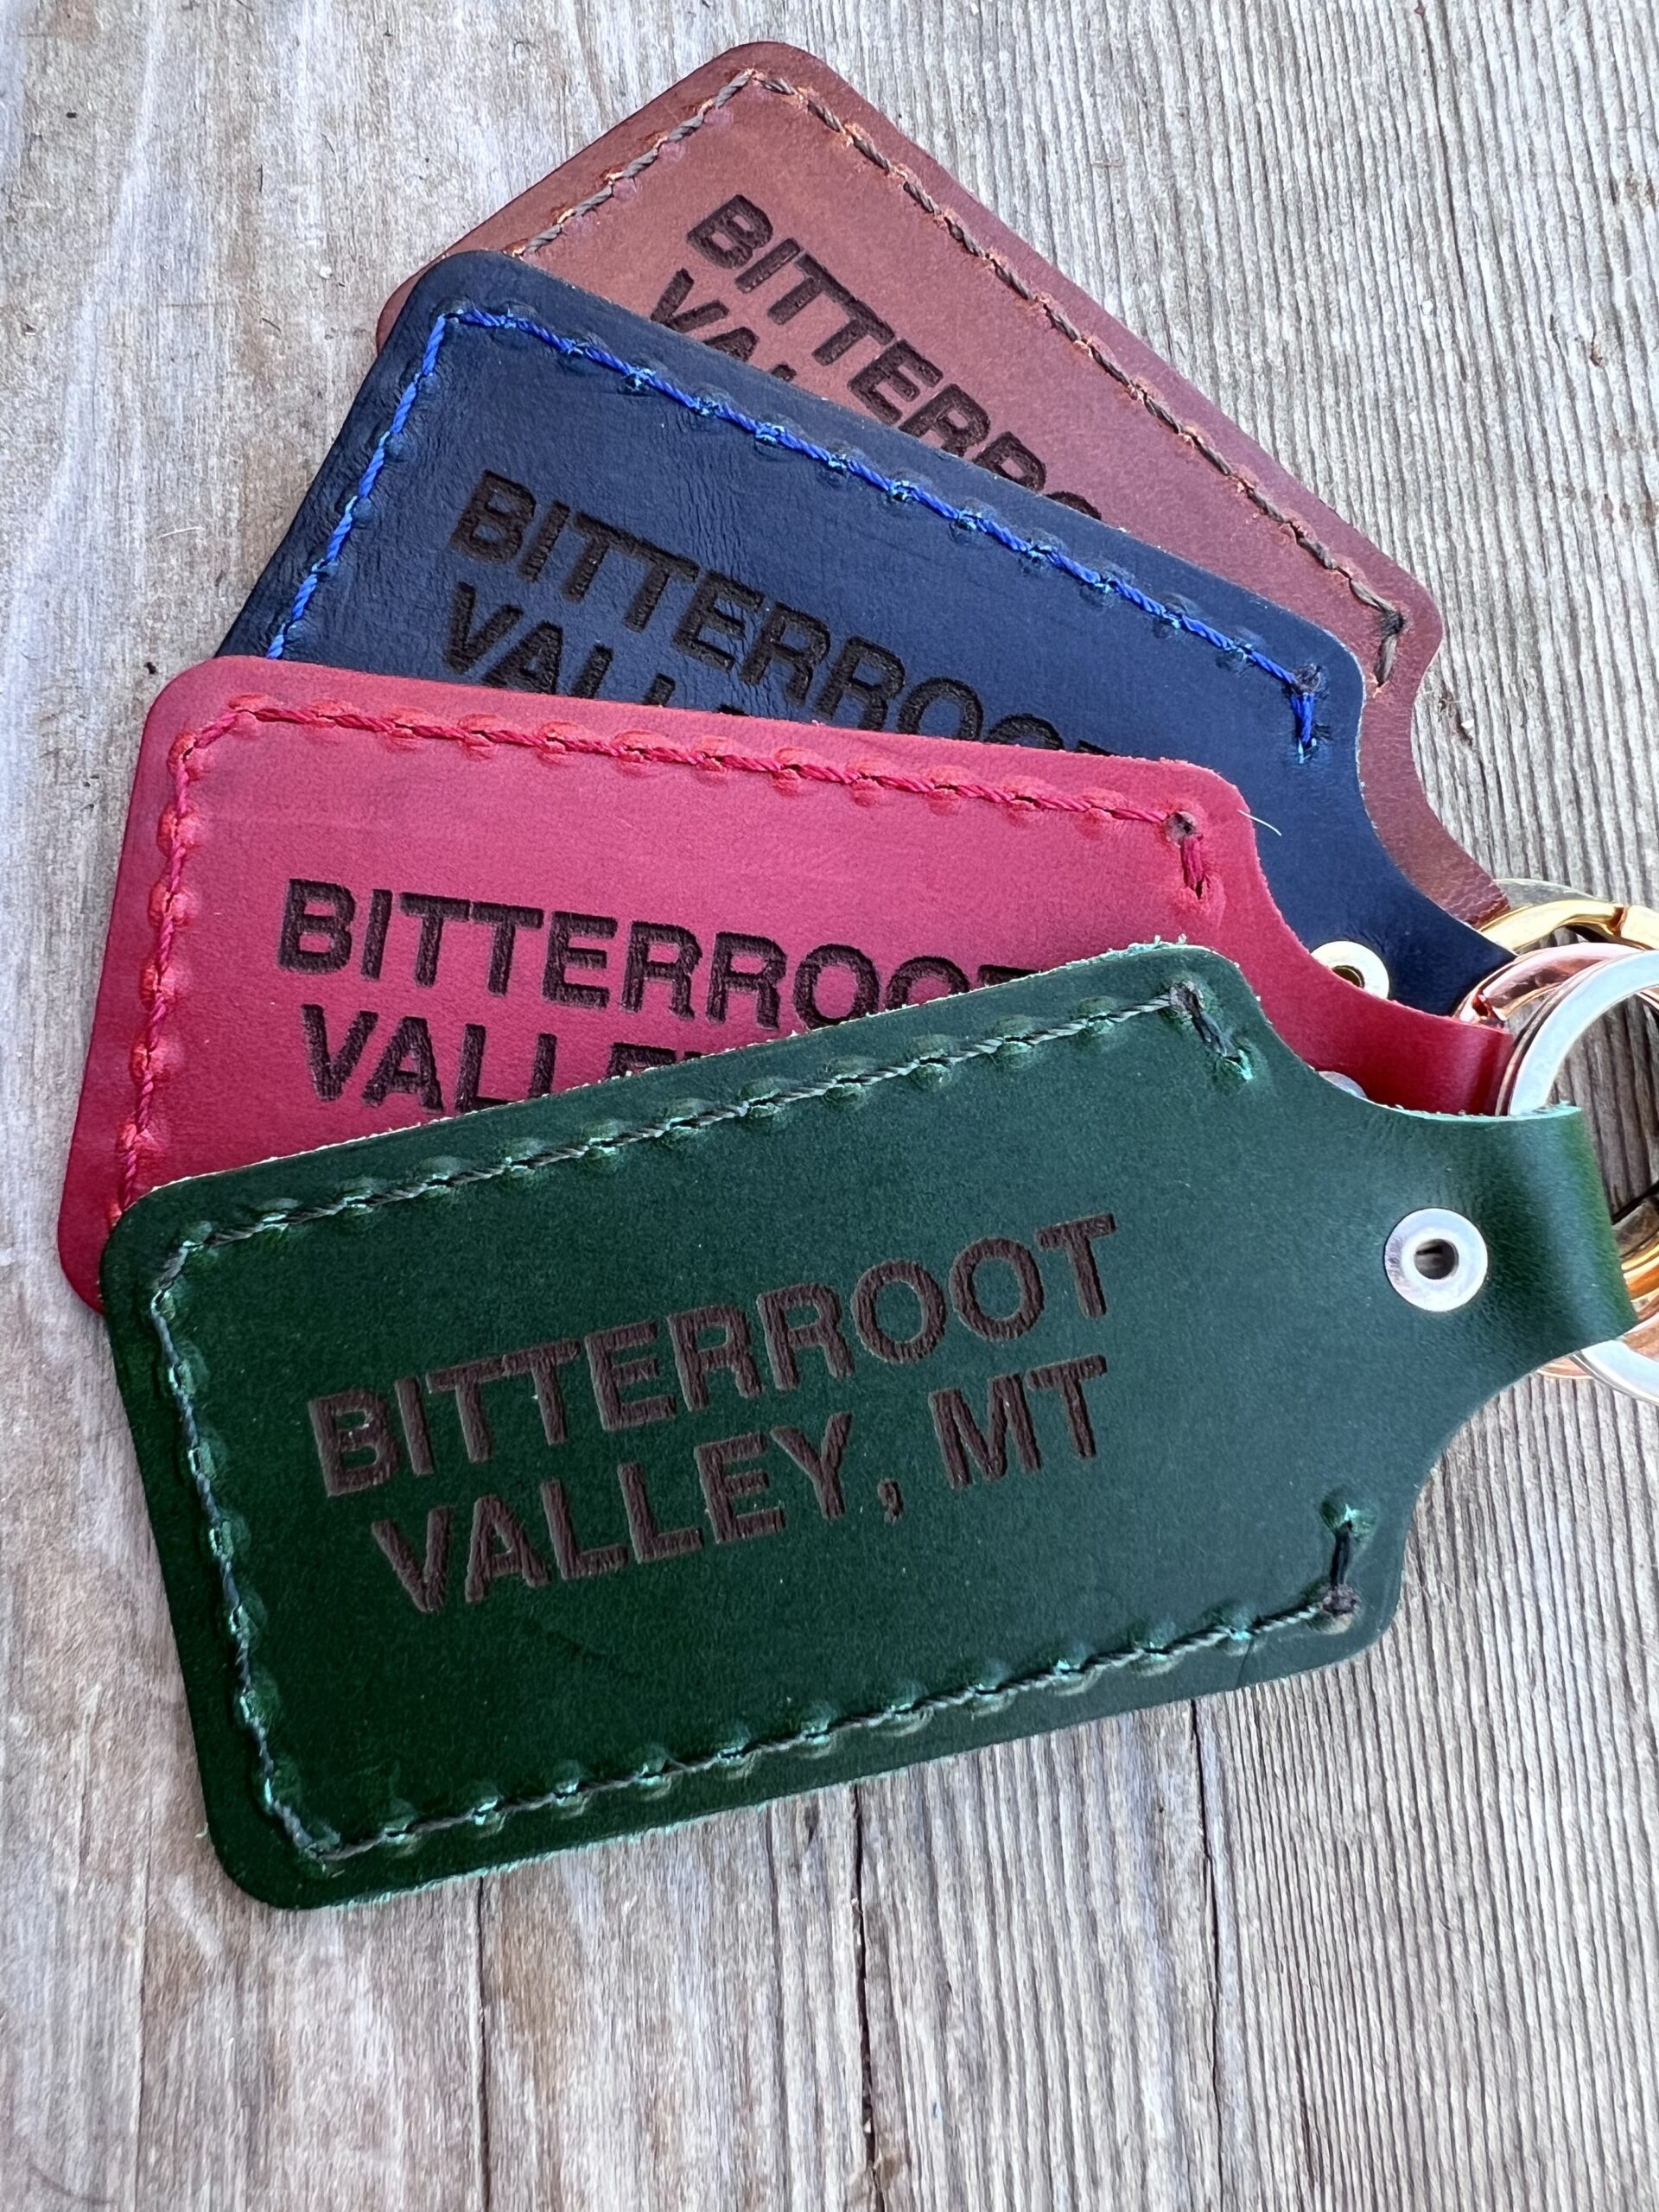 Back of Bitterroot Valley, MT Keychains